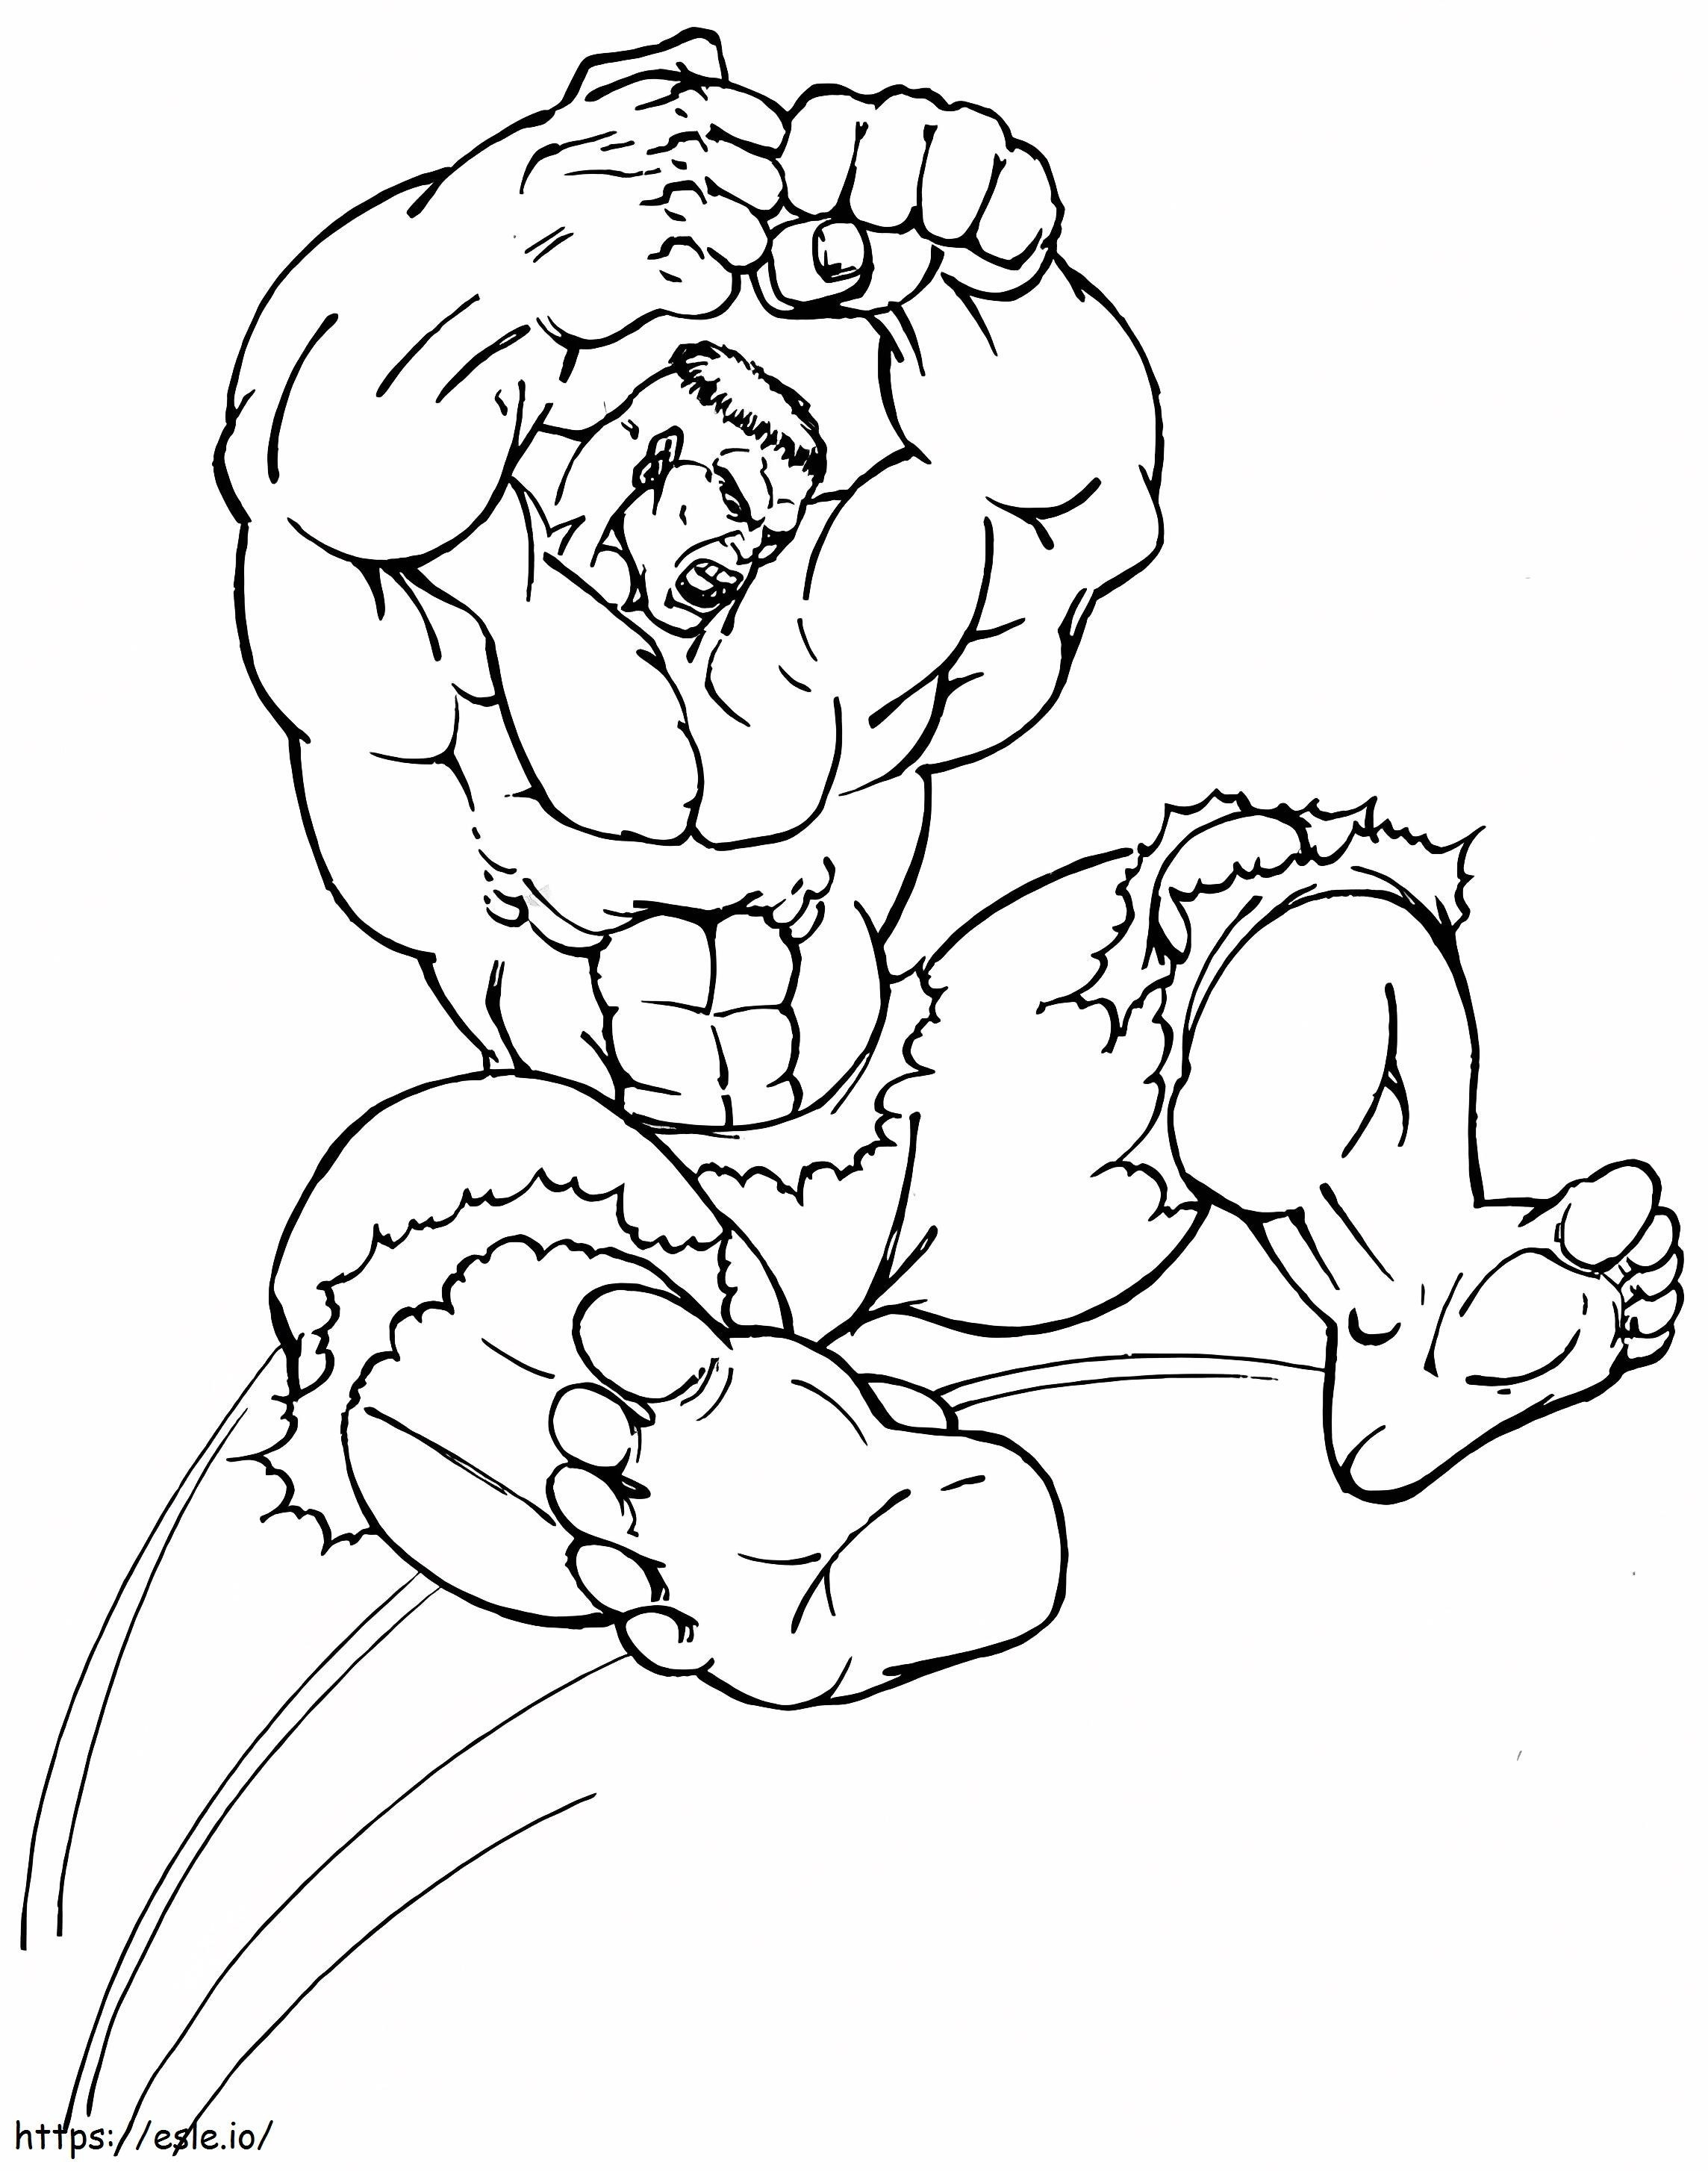  Hulk skaczący A4 kolorowanka